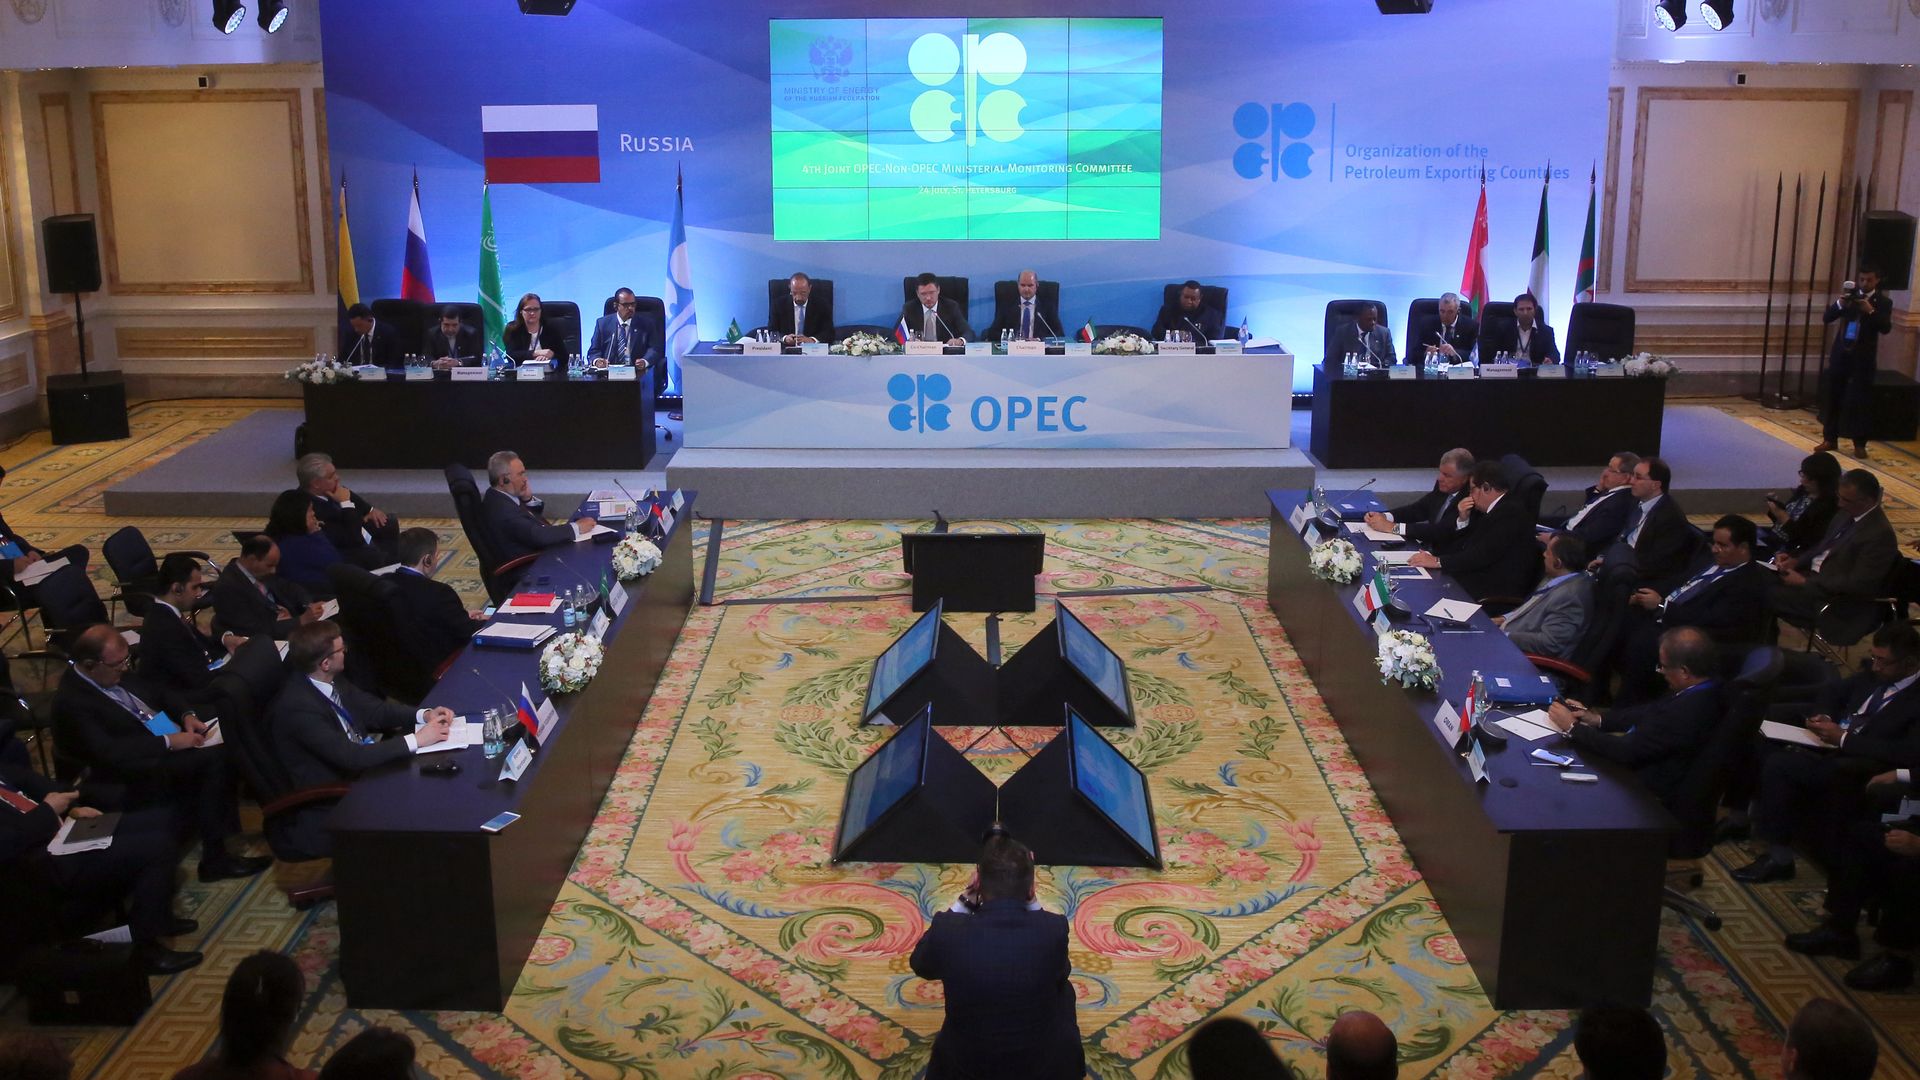 An OPEC meeting in St Petersburg, Russia in 2017